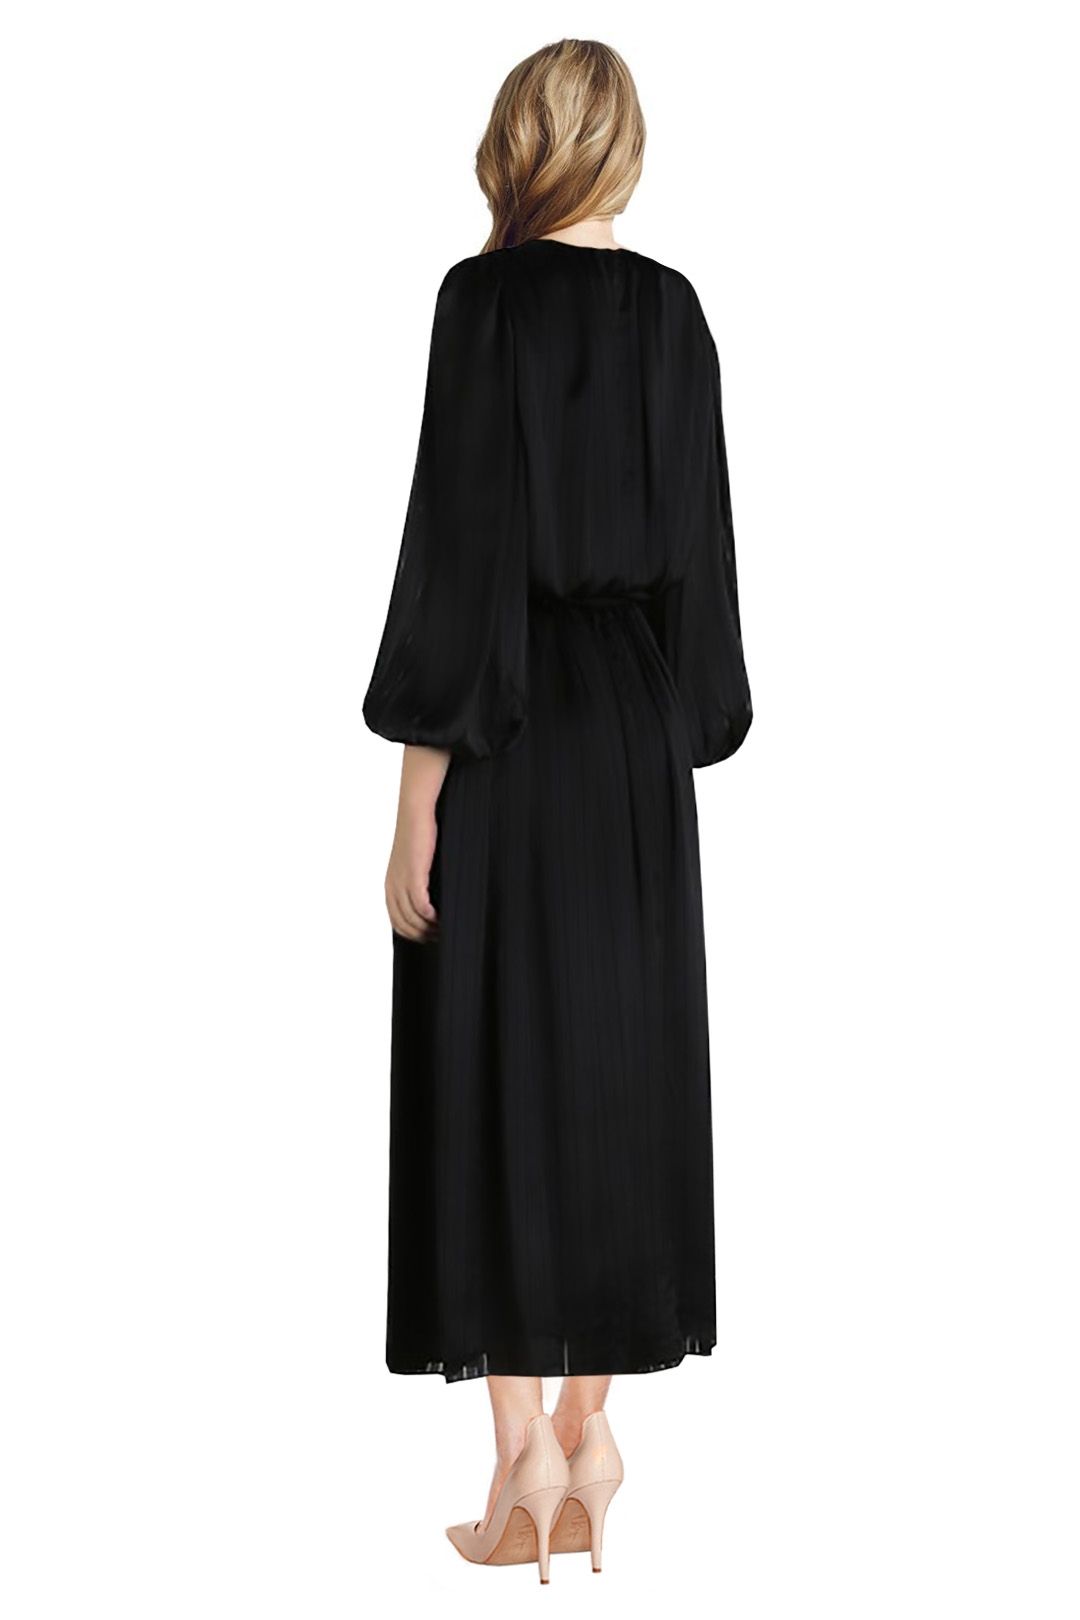 Zimmermann - Arcadia Stripe Slouch Dress - Black - Back